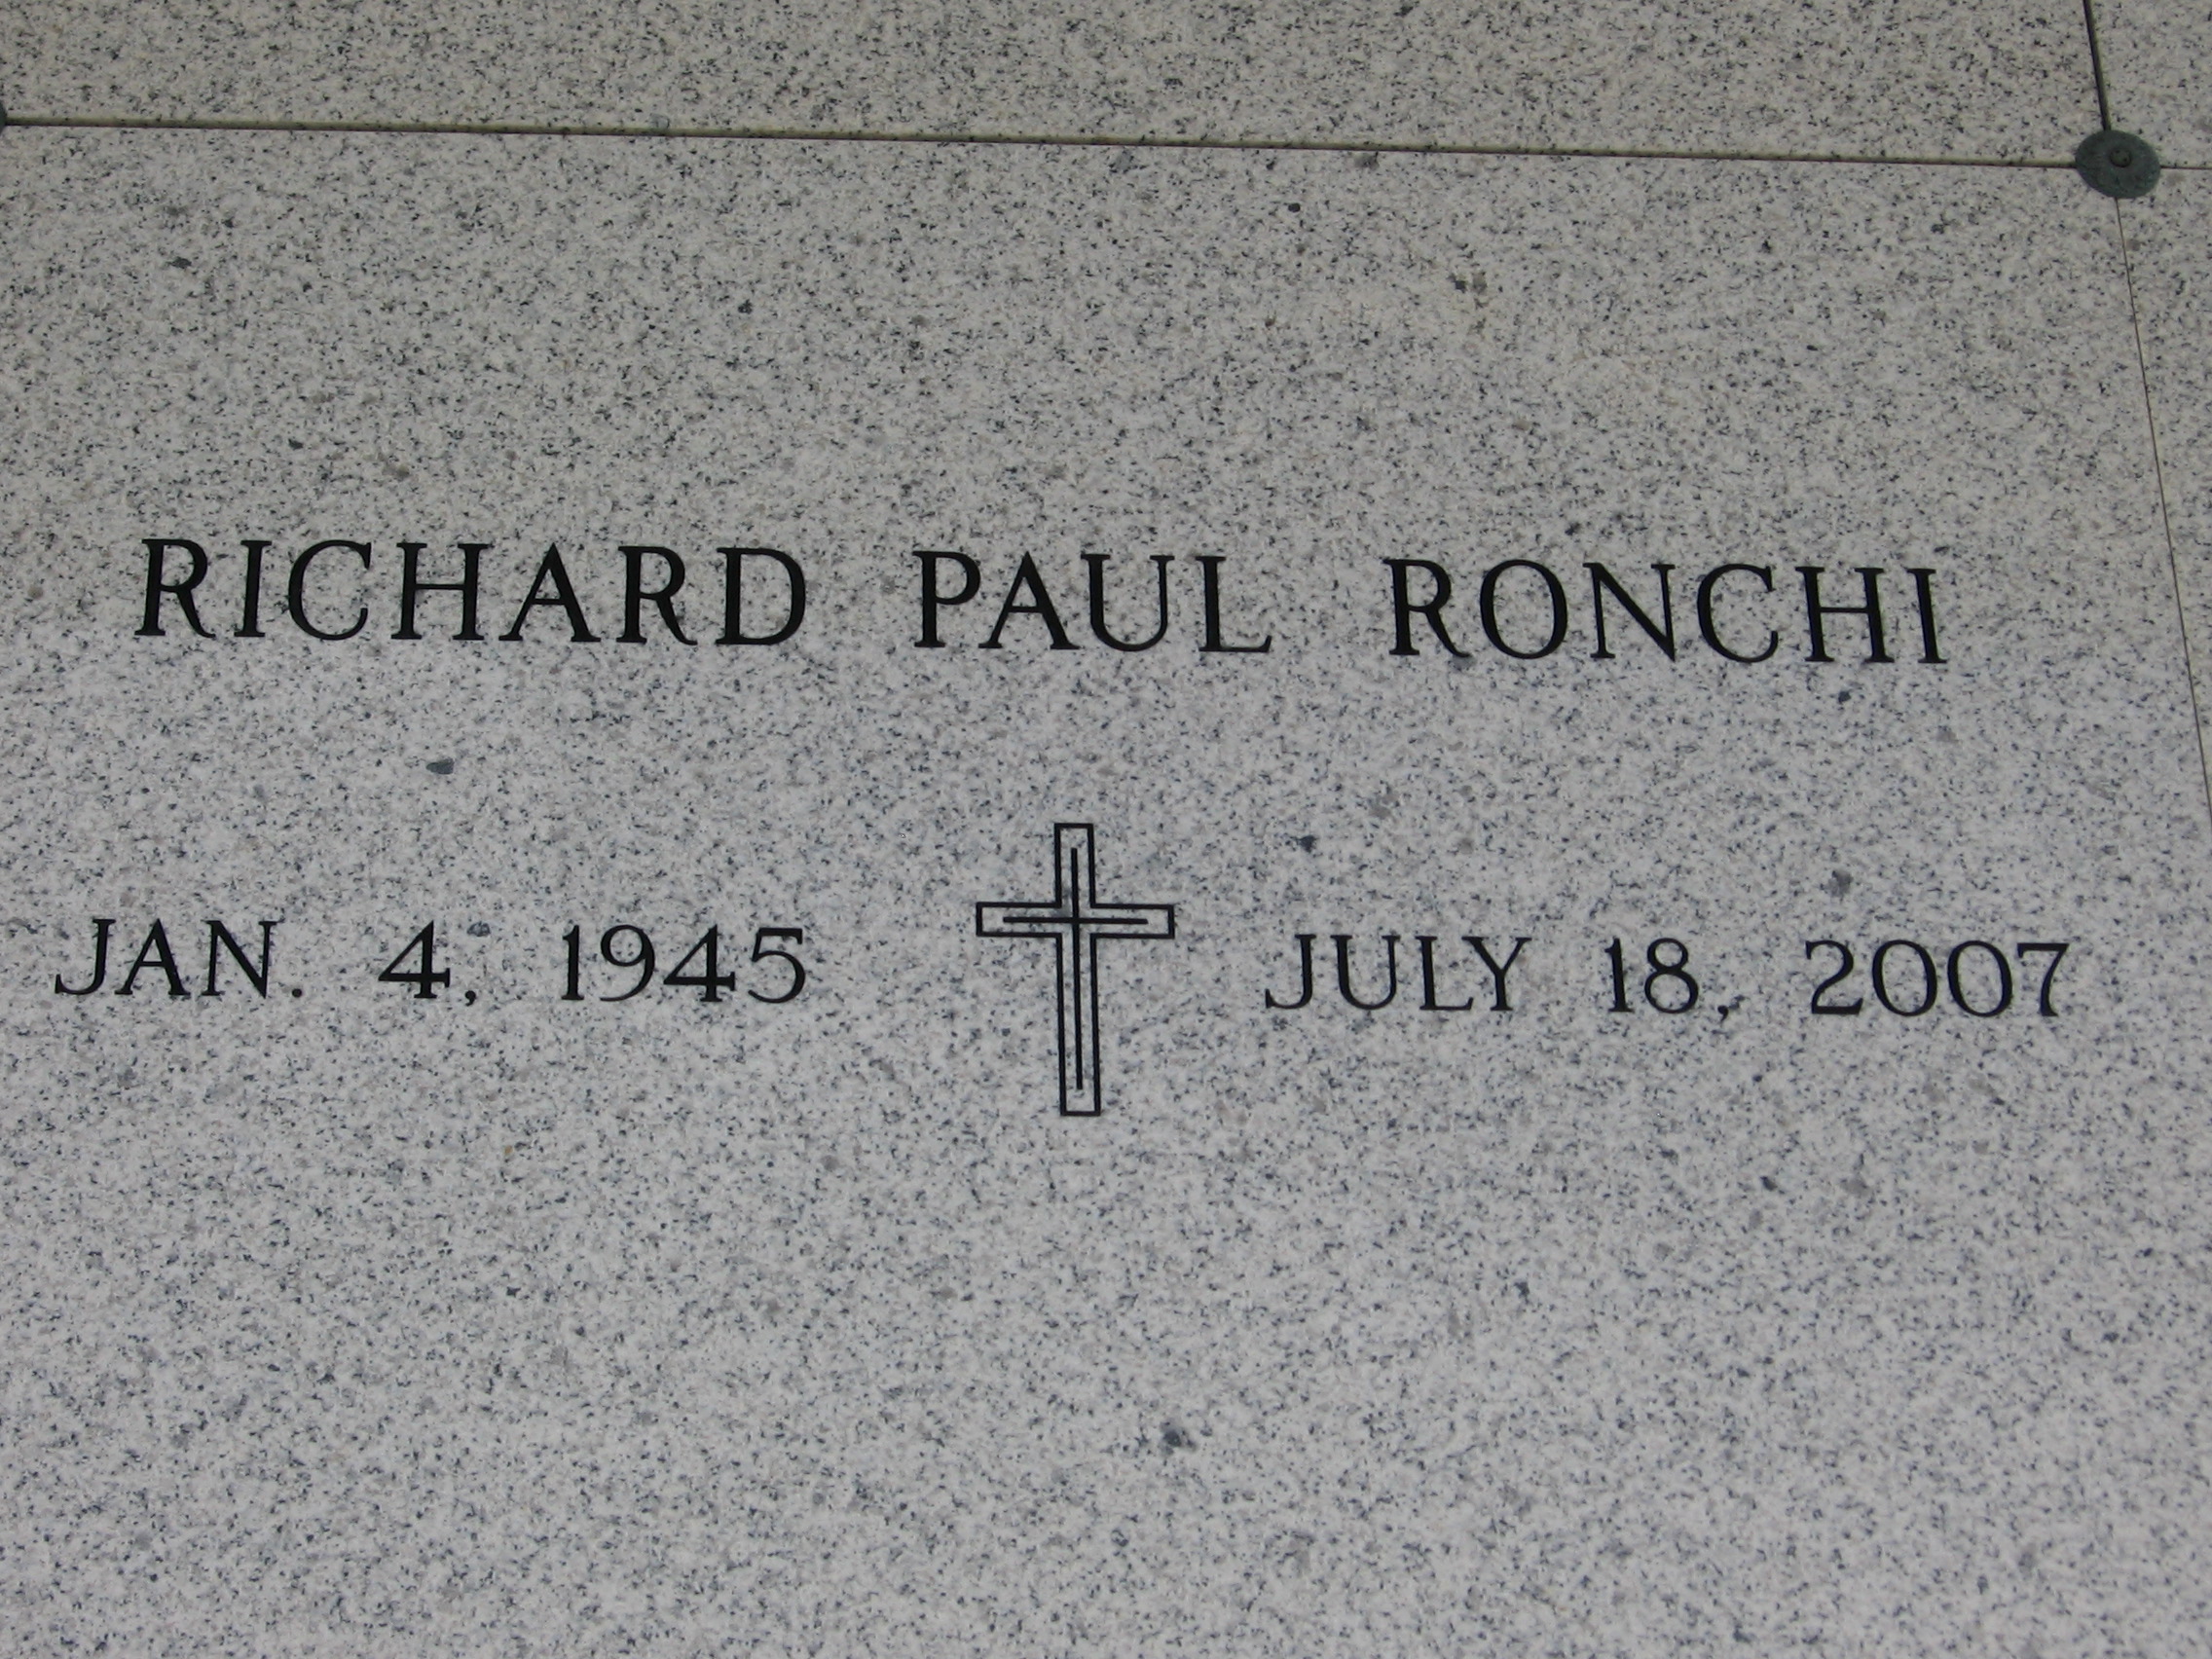 Richard Paul Ronchi